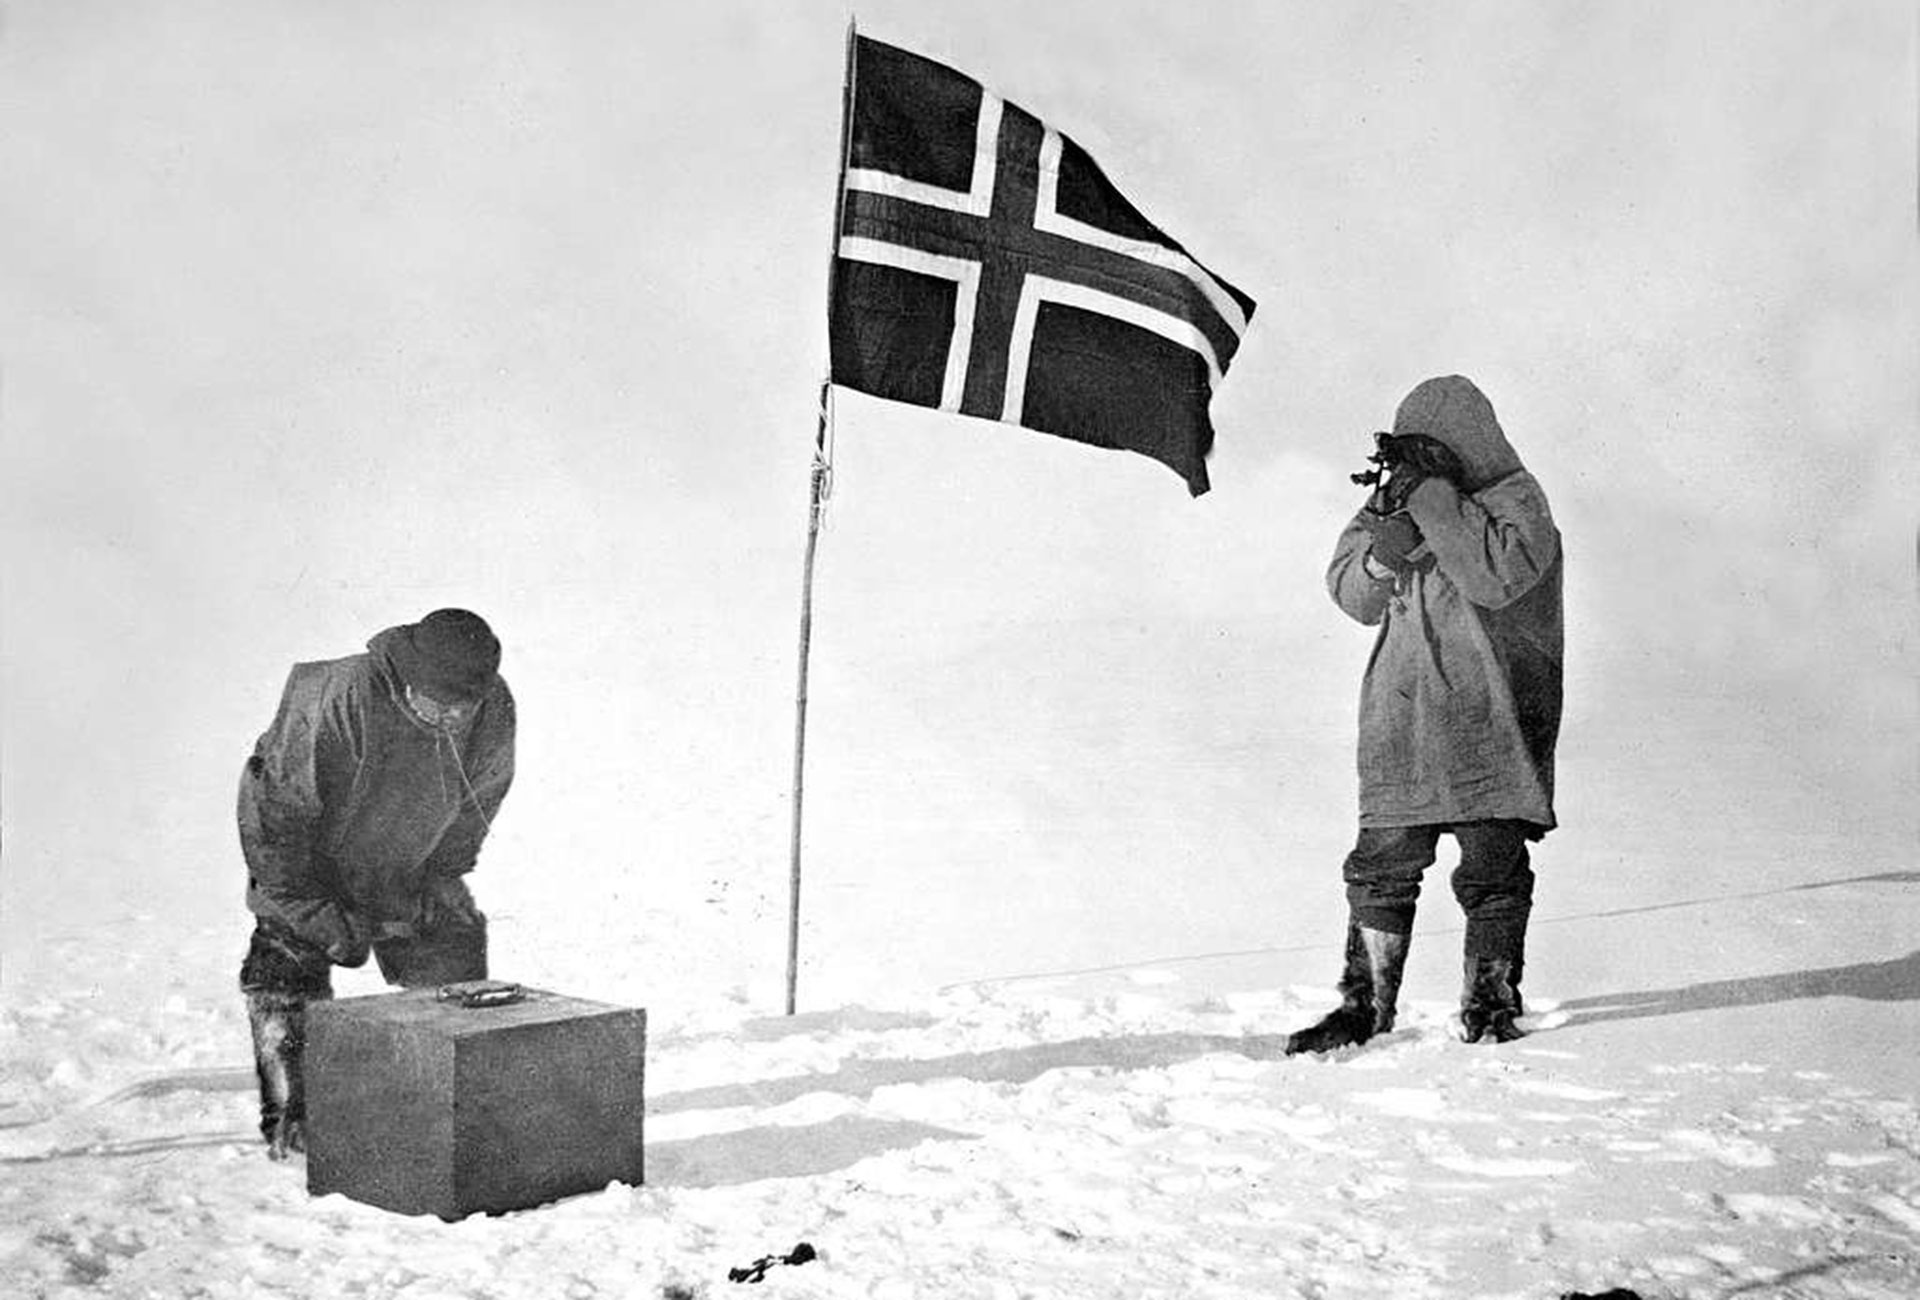 Roald Amundsen and Helmer Hanssen make observations at the South Pole